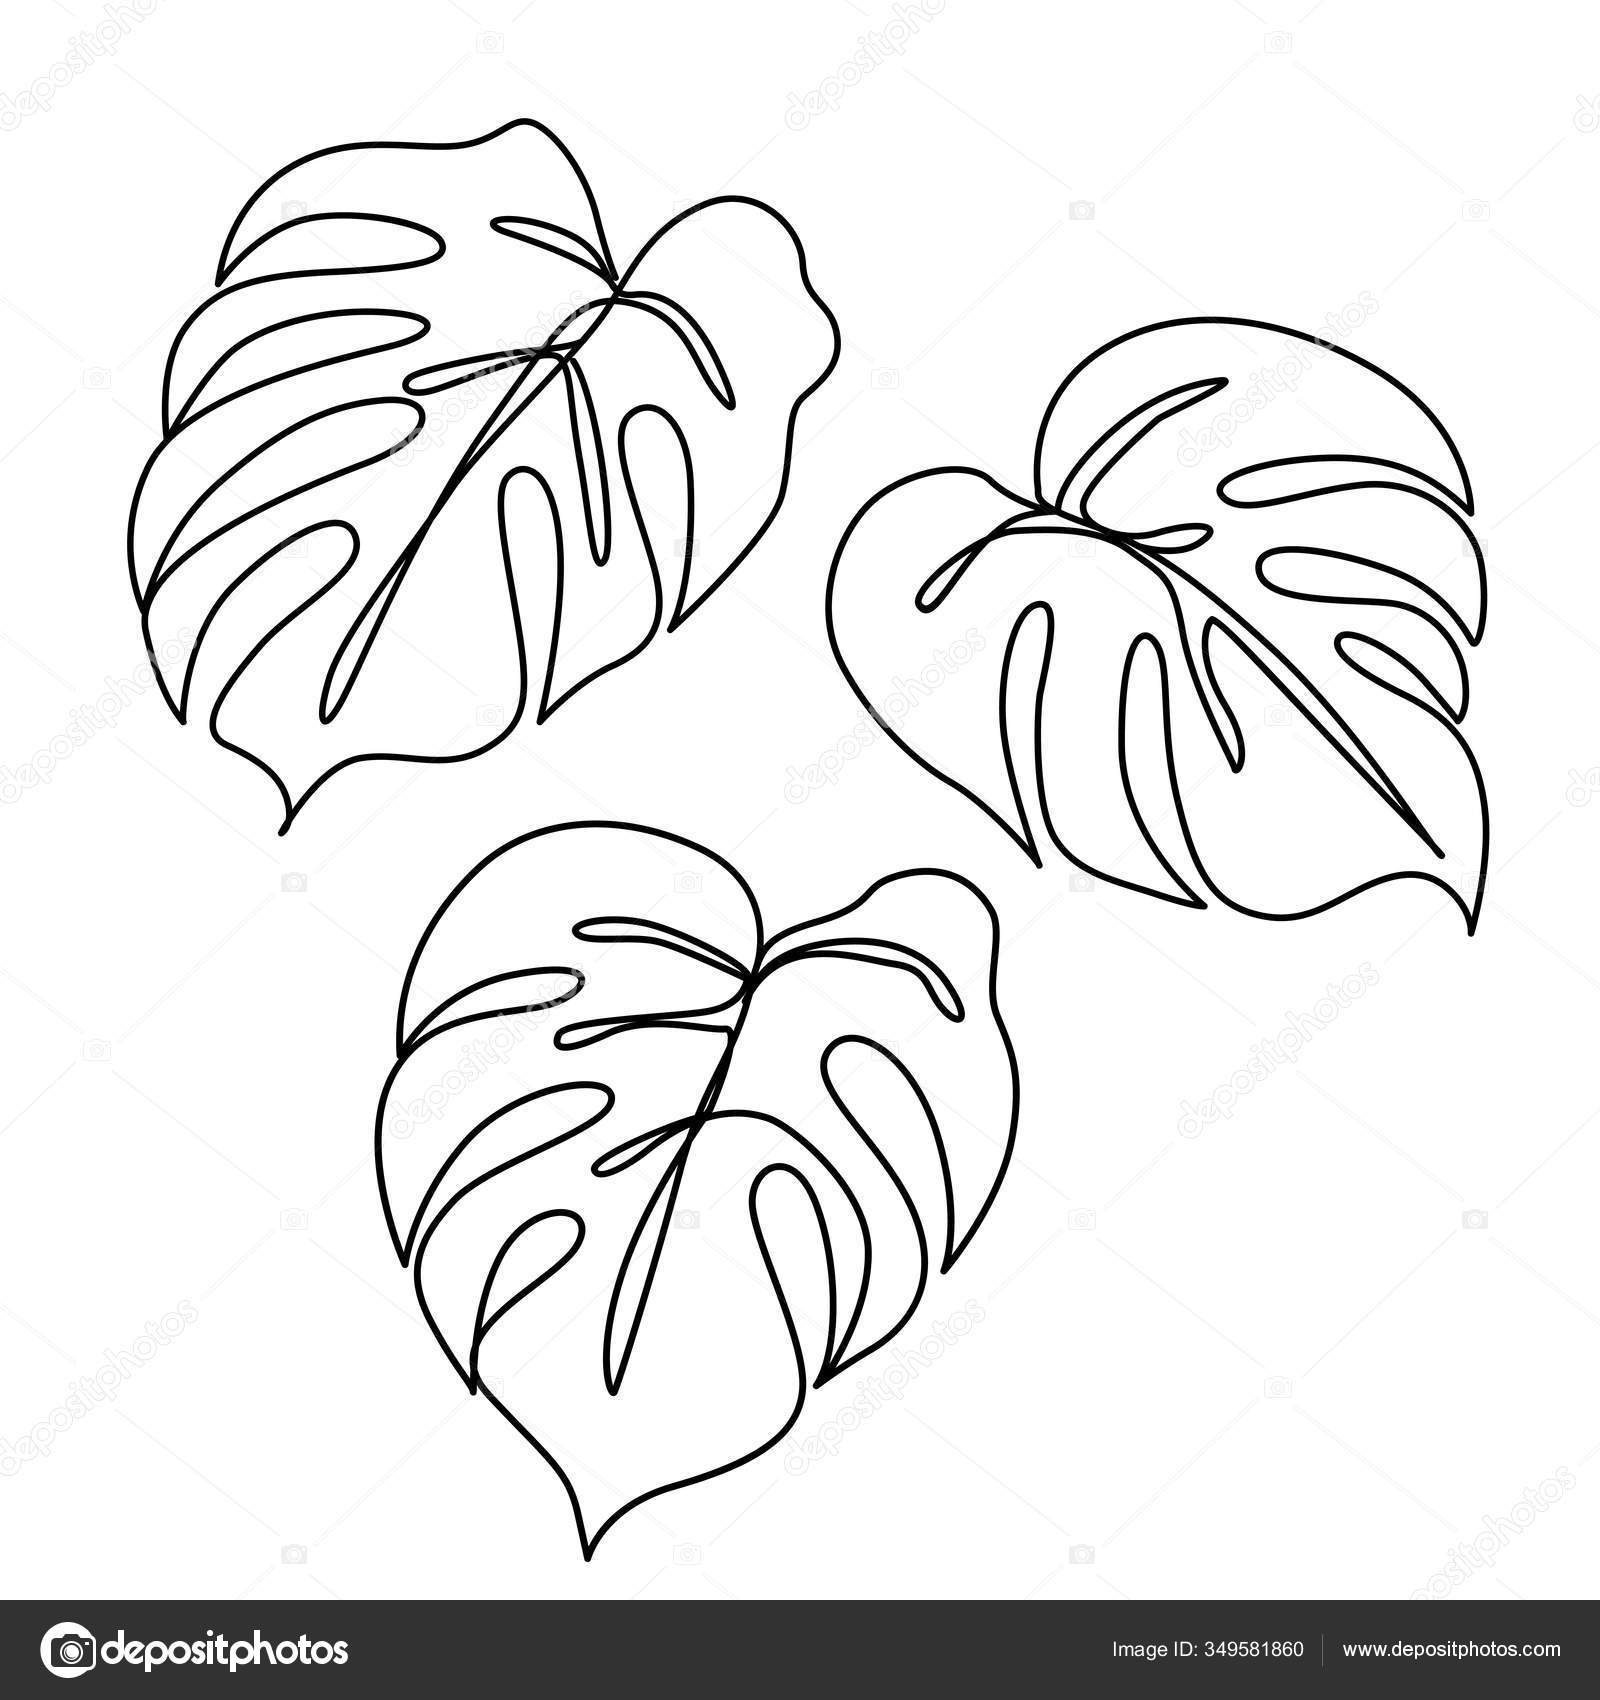 Oak leaf sketch clipart to color, lge 12 cm long | This clip… | Flickr